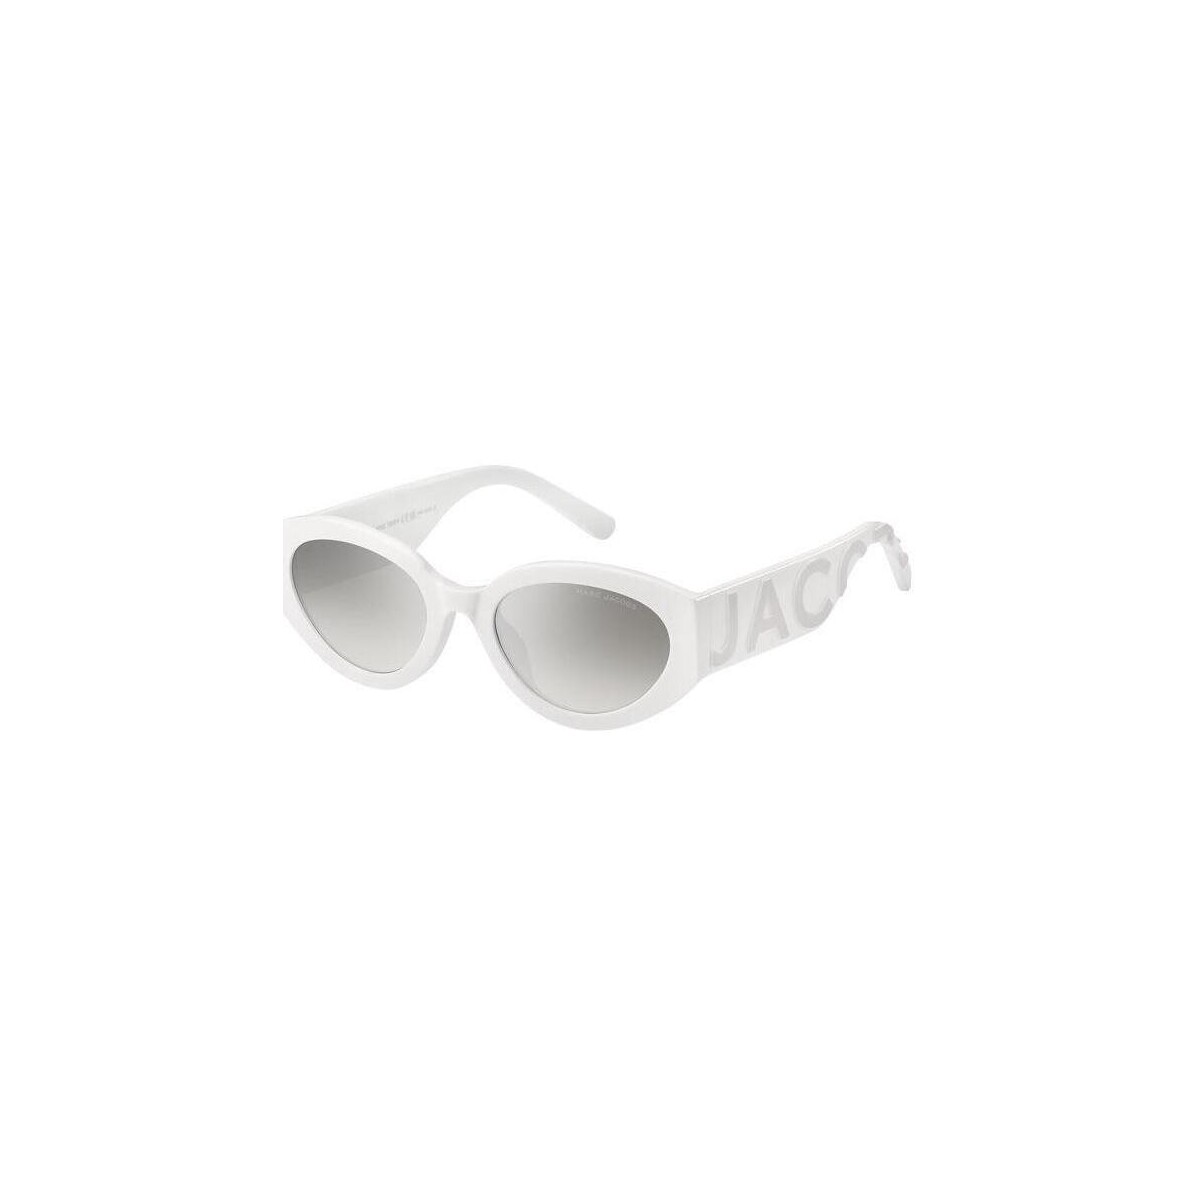 Orologi & Gioielli Donna Occhiali da sole Marc Jacobs MARC 694/G/S Occhiali da sole, Bianco/Argento, 54 mm Bianco